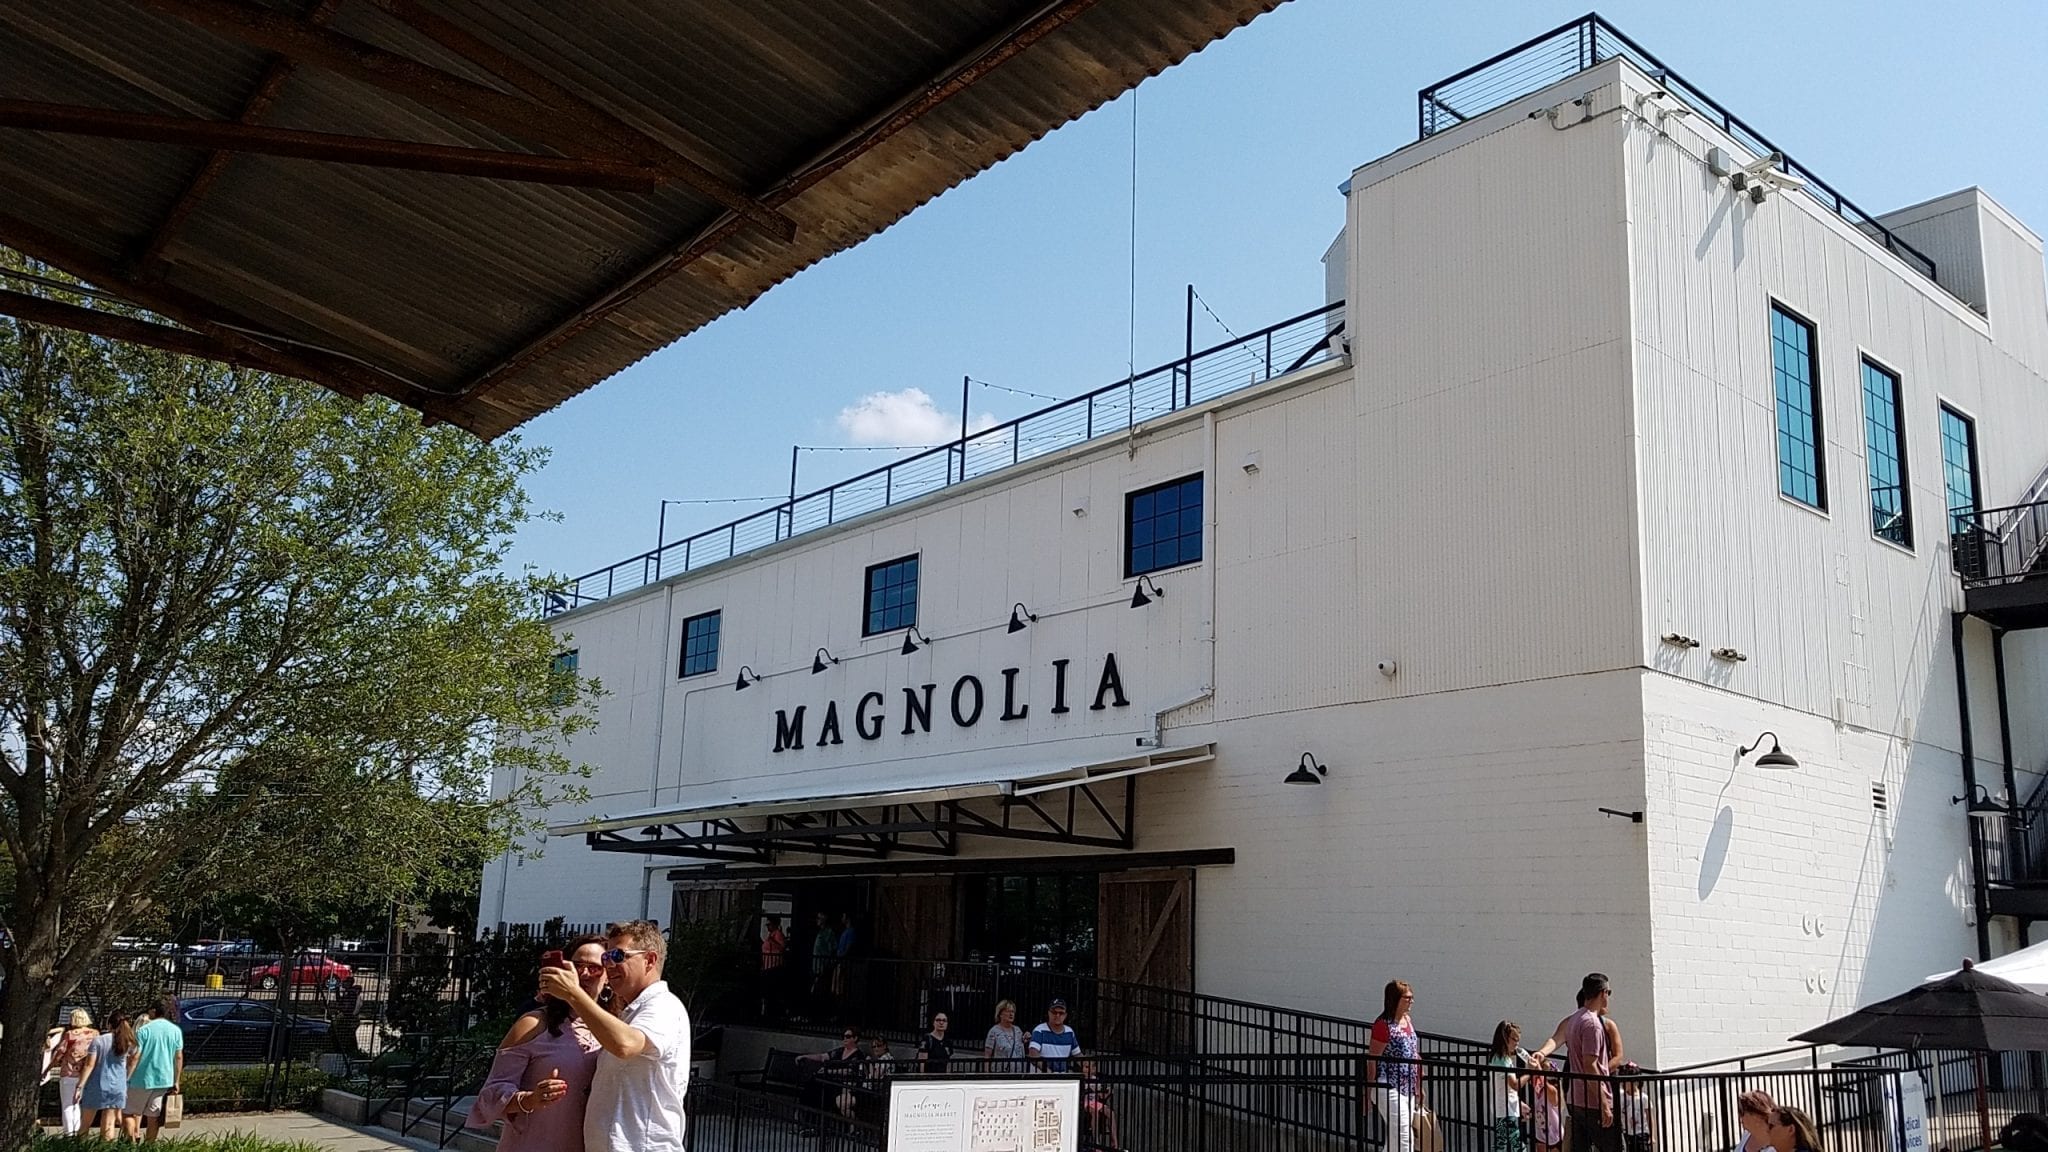 Image of the Magnolia Market in Waco, Texas